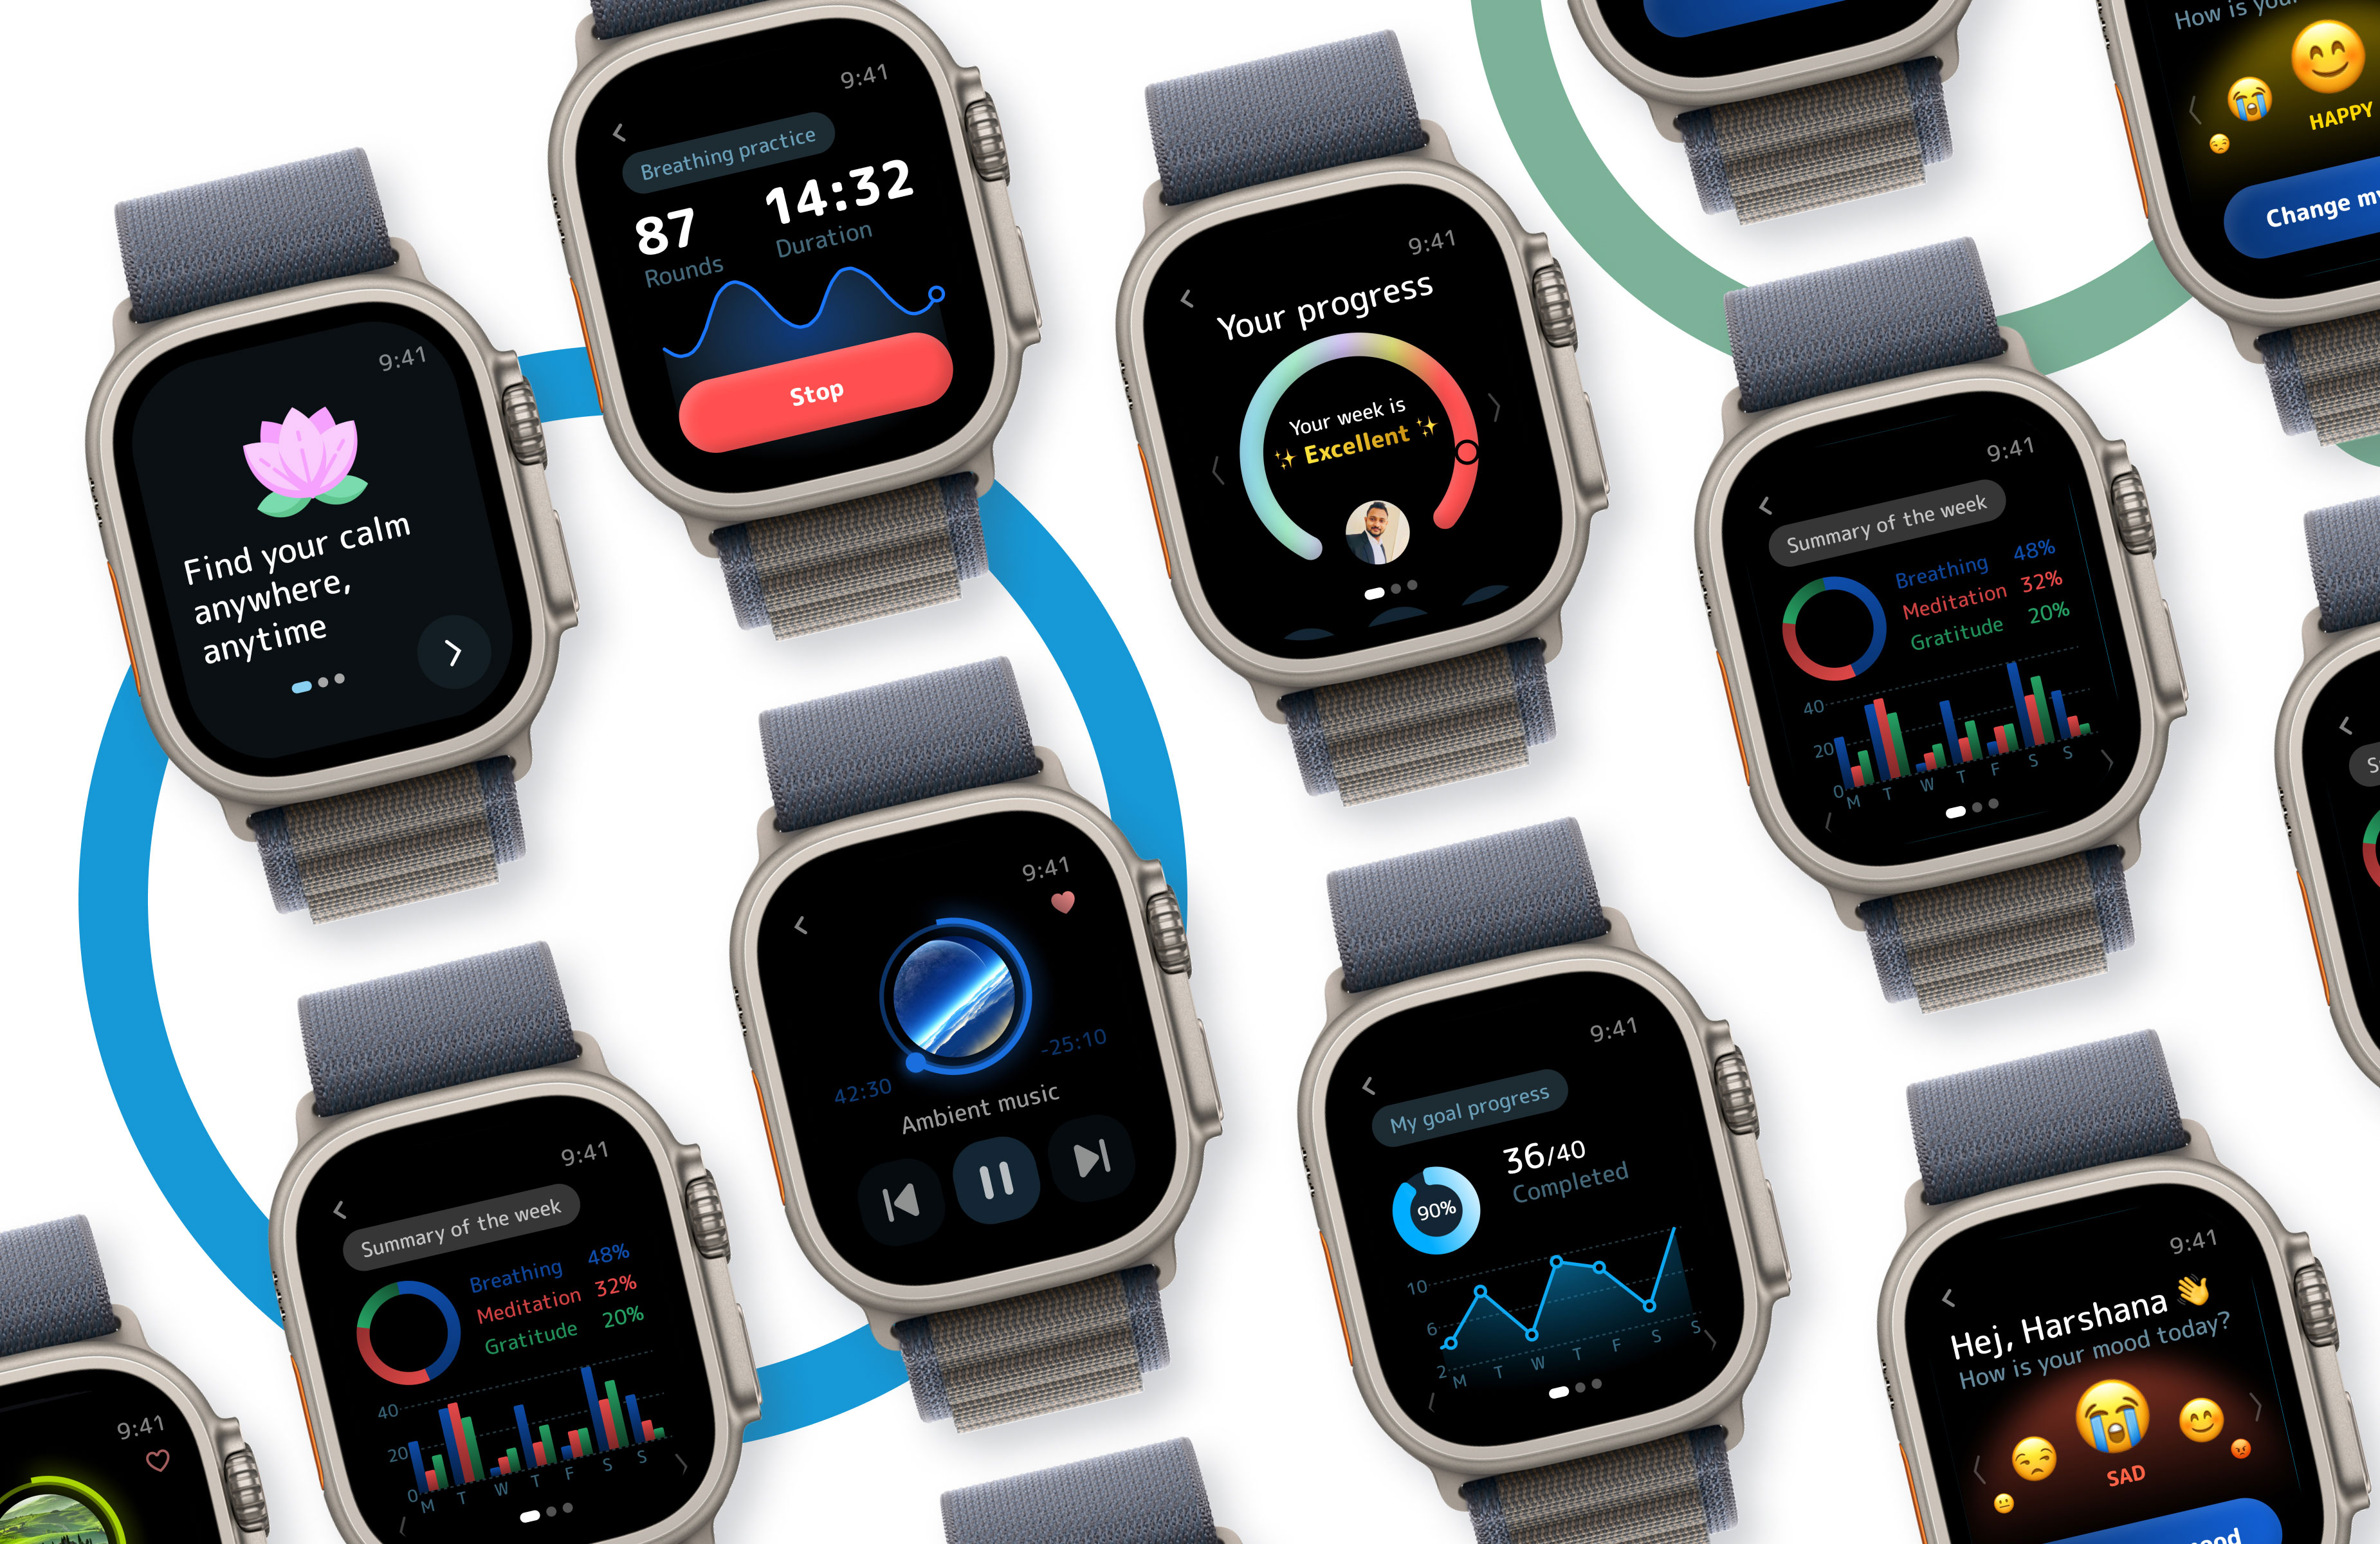 Case study - Mindful Minute Apple watchOS app UI UX design by Harshana Gamage